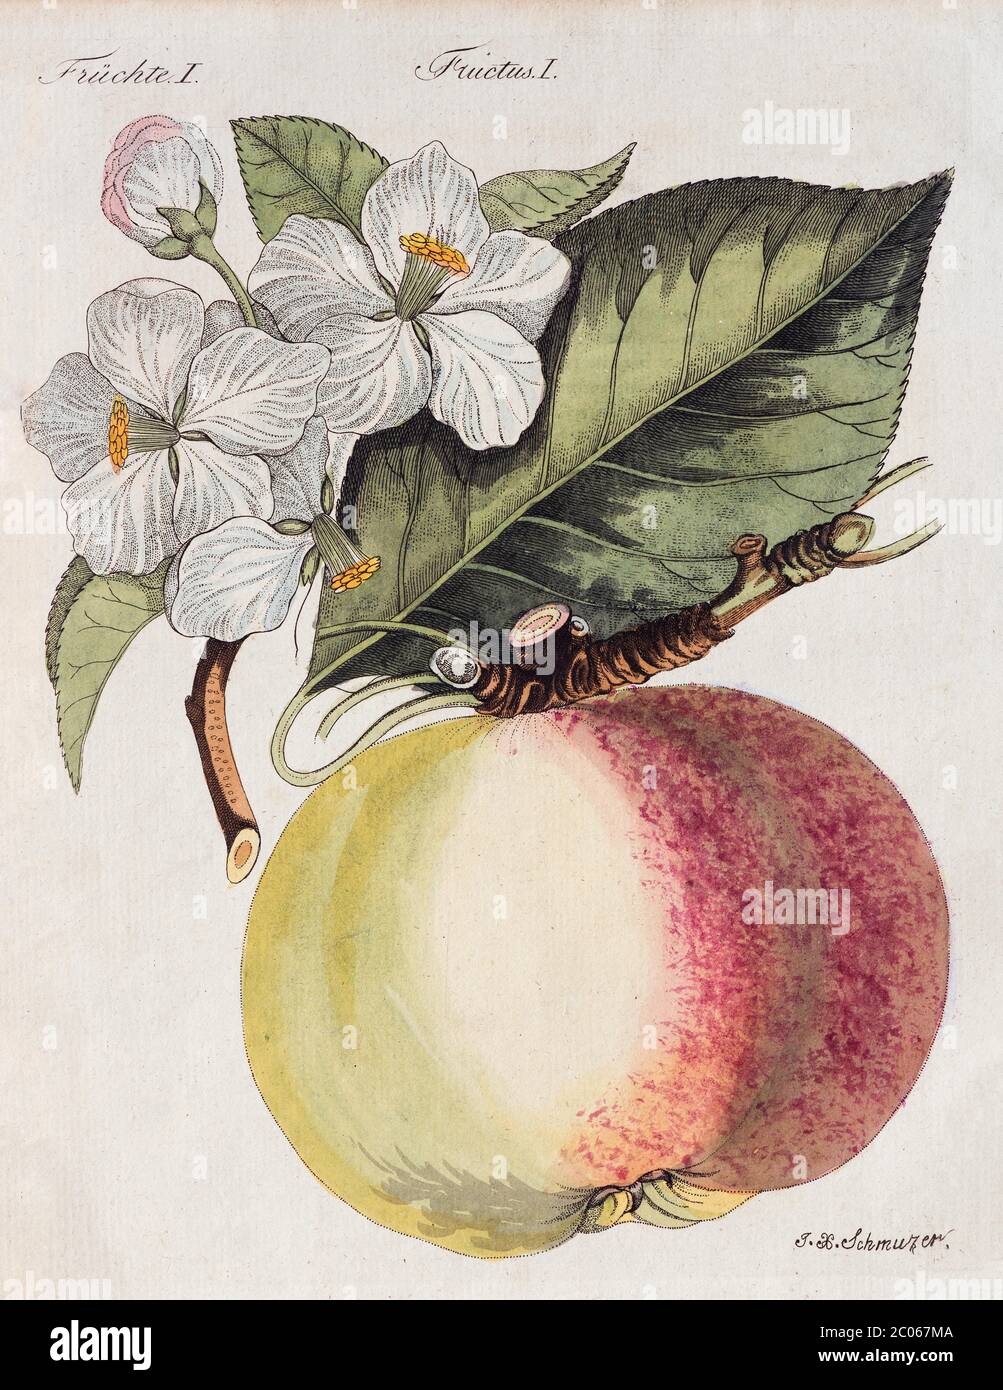 Boskoop, albero di mele (Malus domestica), incisione a mano su copperplate dal libro di immagini per bambini Friedrich Justin Bertuch, 1805, Weimar, Germ Foto Stock